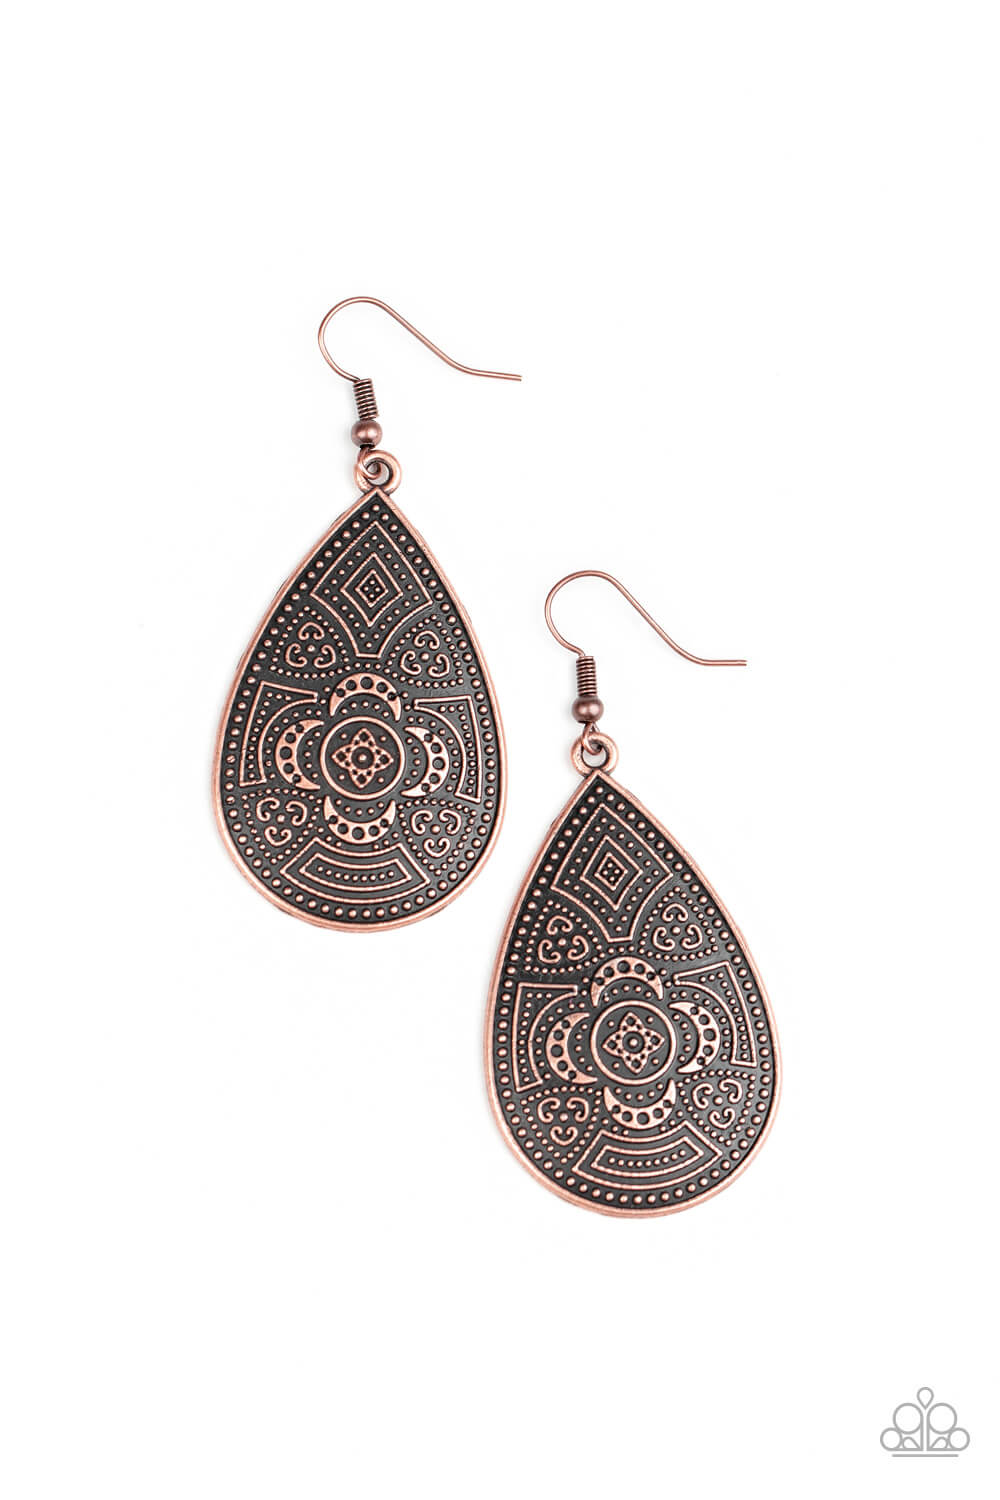 Tribal Takeover - Copper Eaerrings - Princess Glam Shop